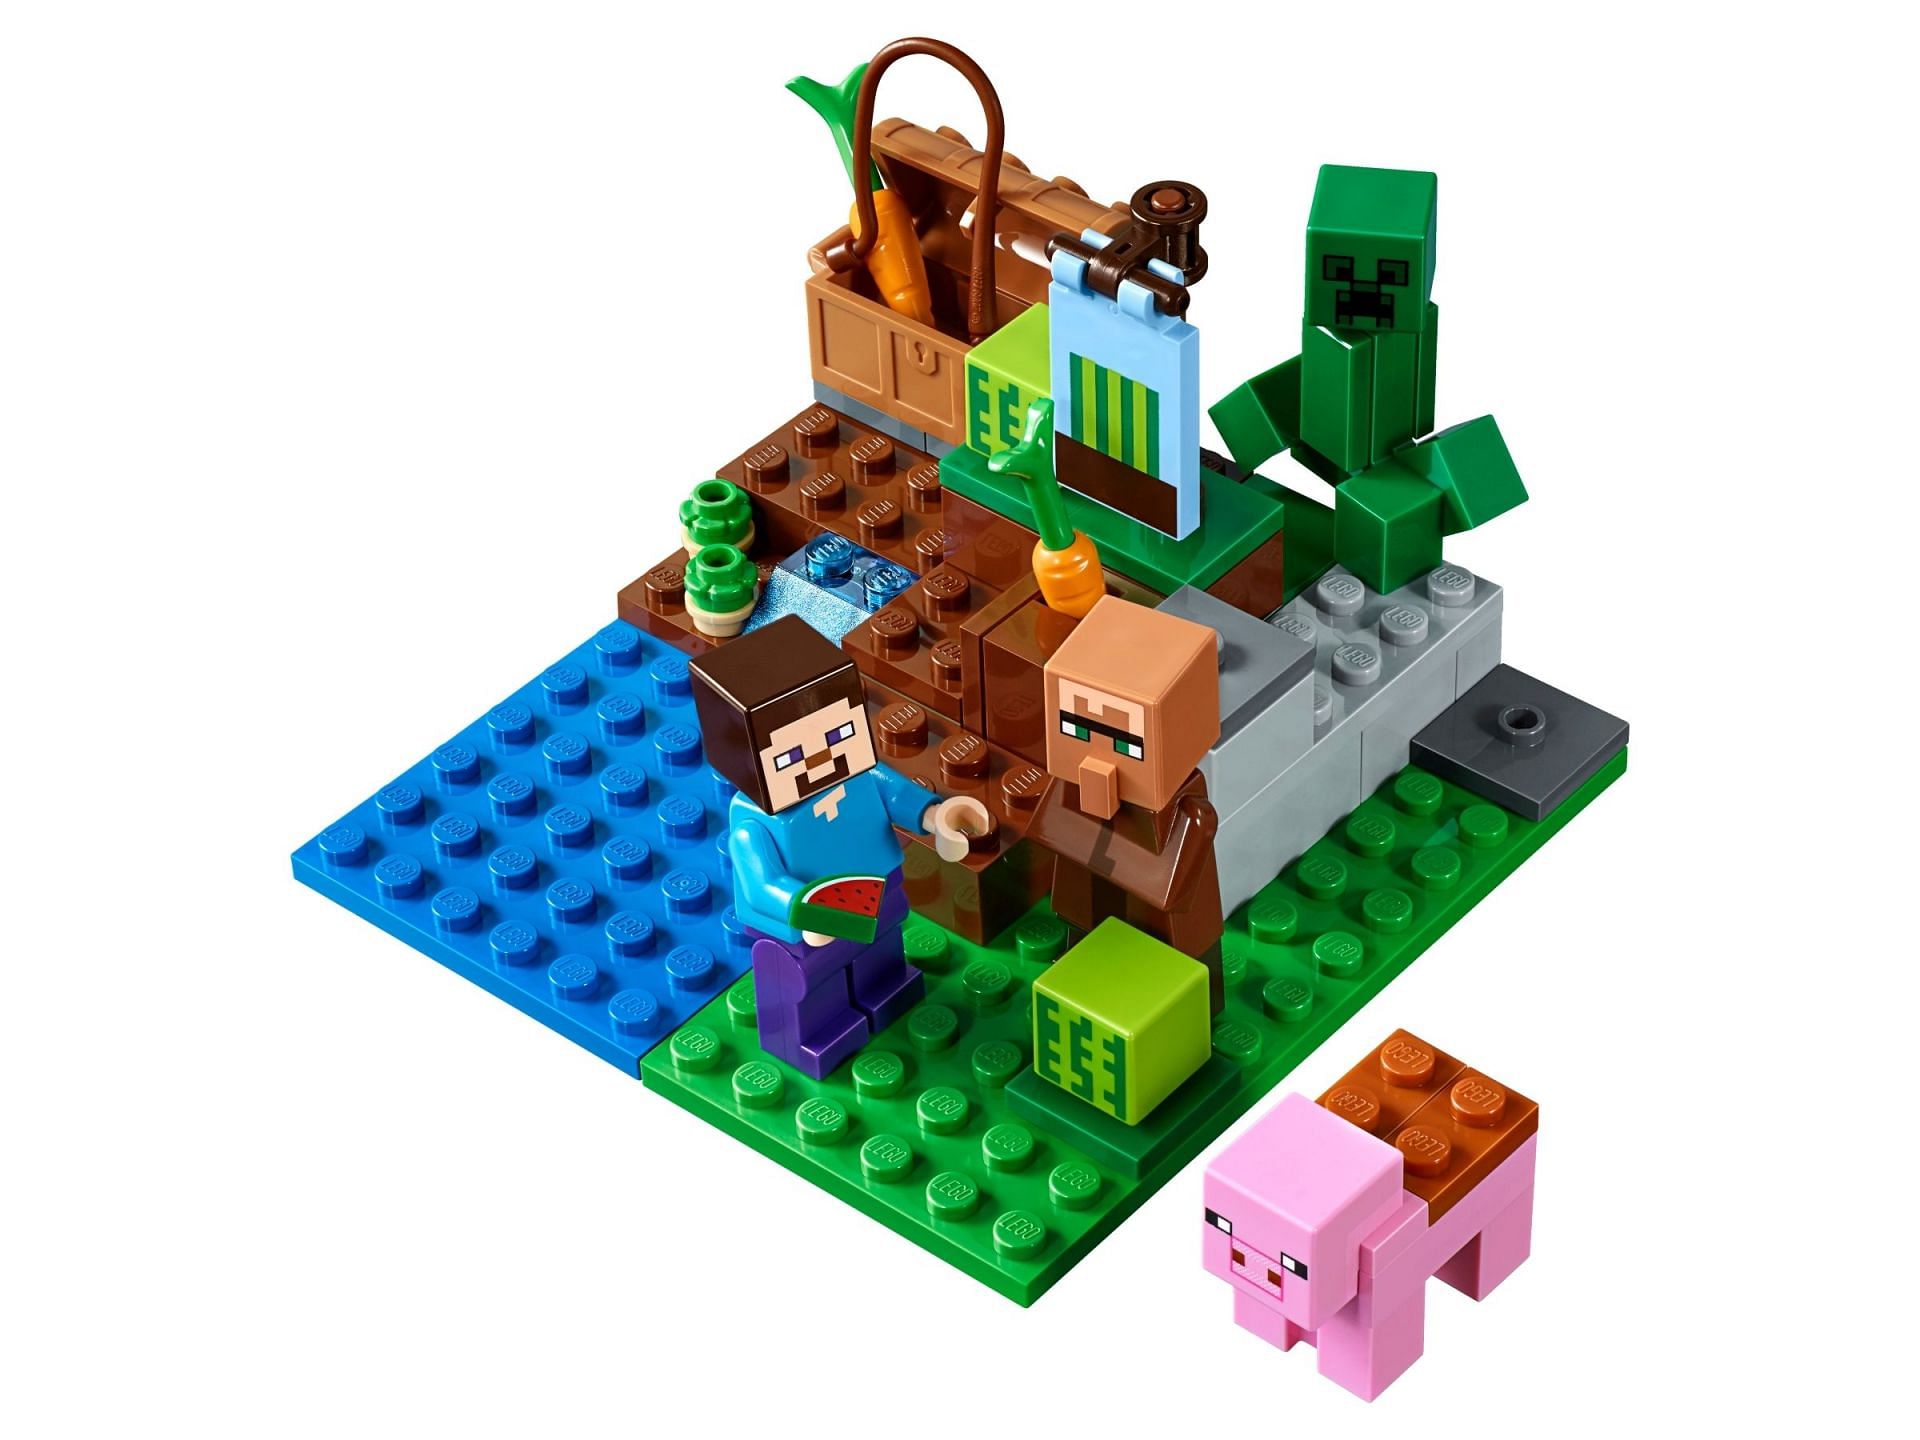 The Melon Farm Lego set (Image via Lego)